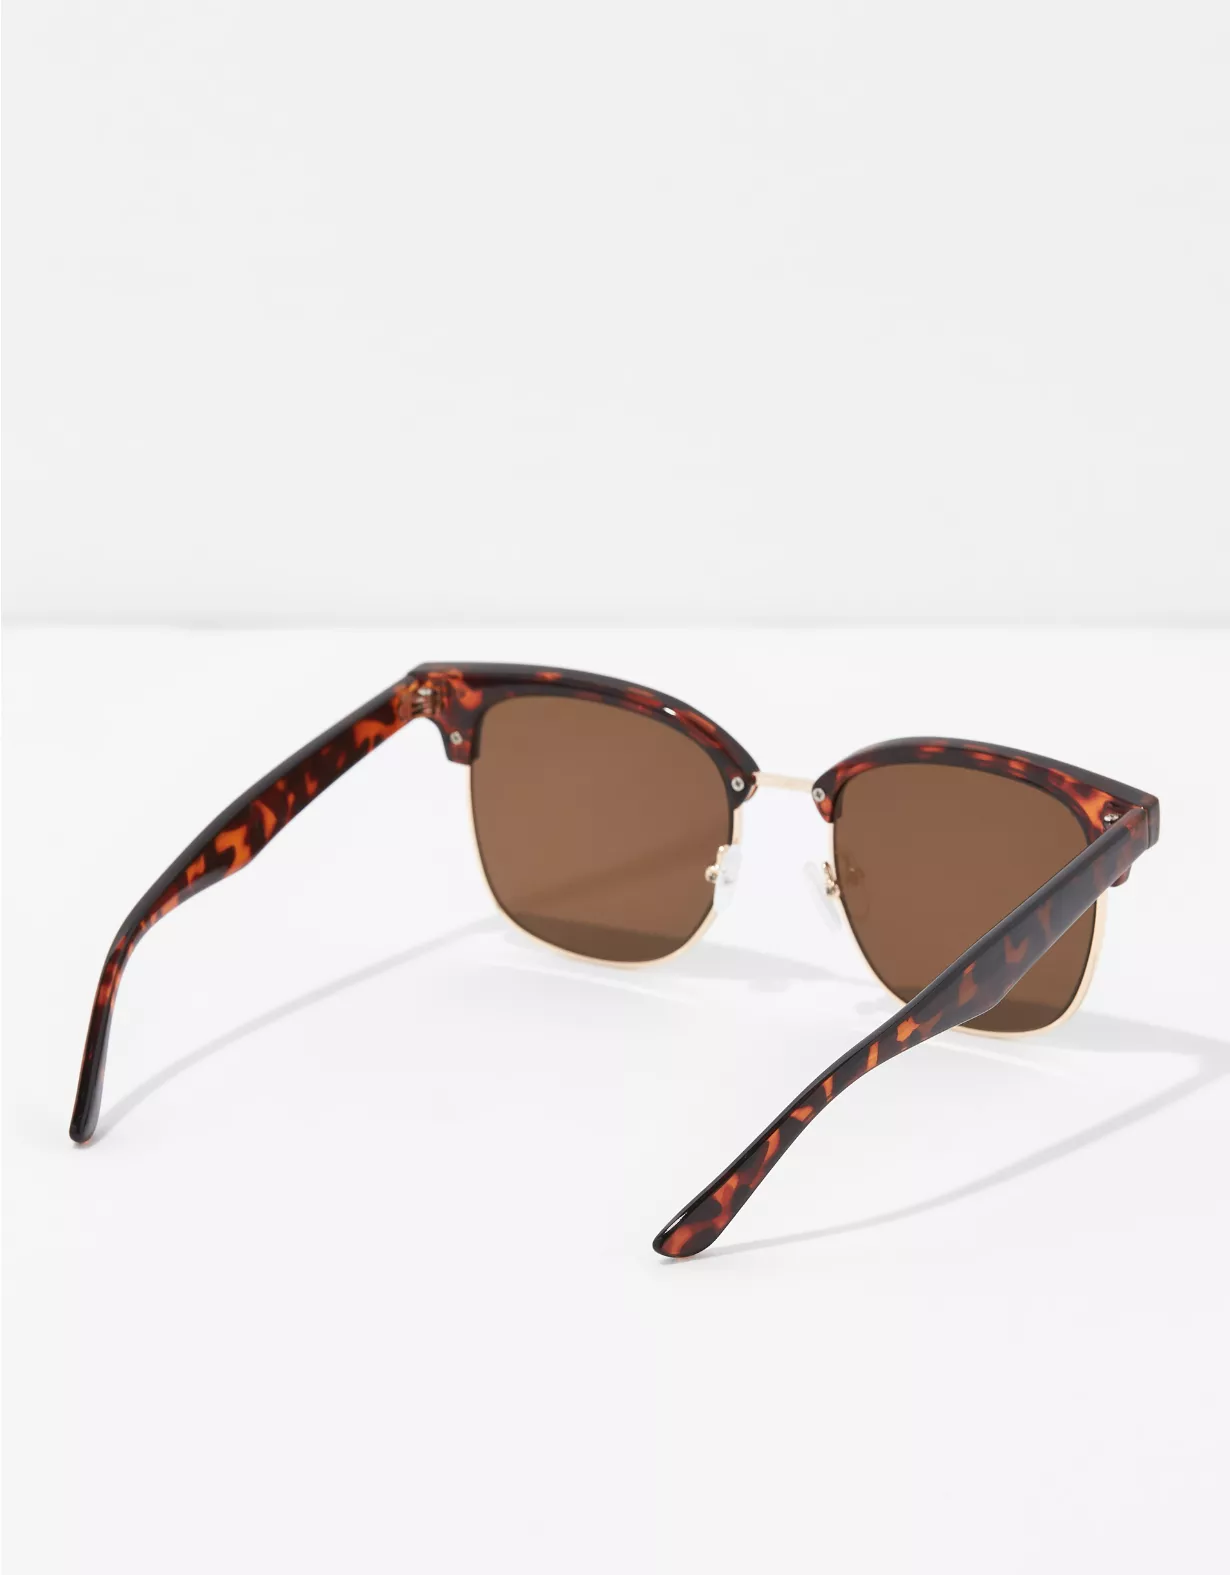 AEO Tortoise Clubmaster Sunglasses